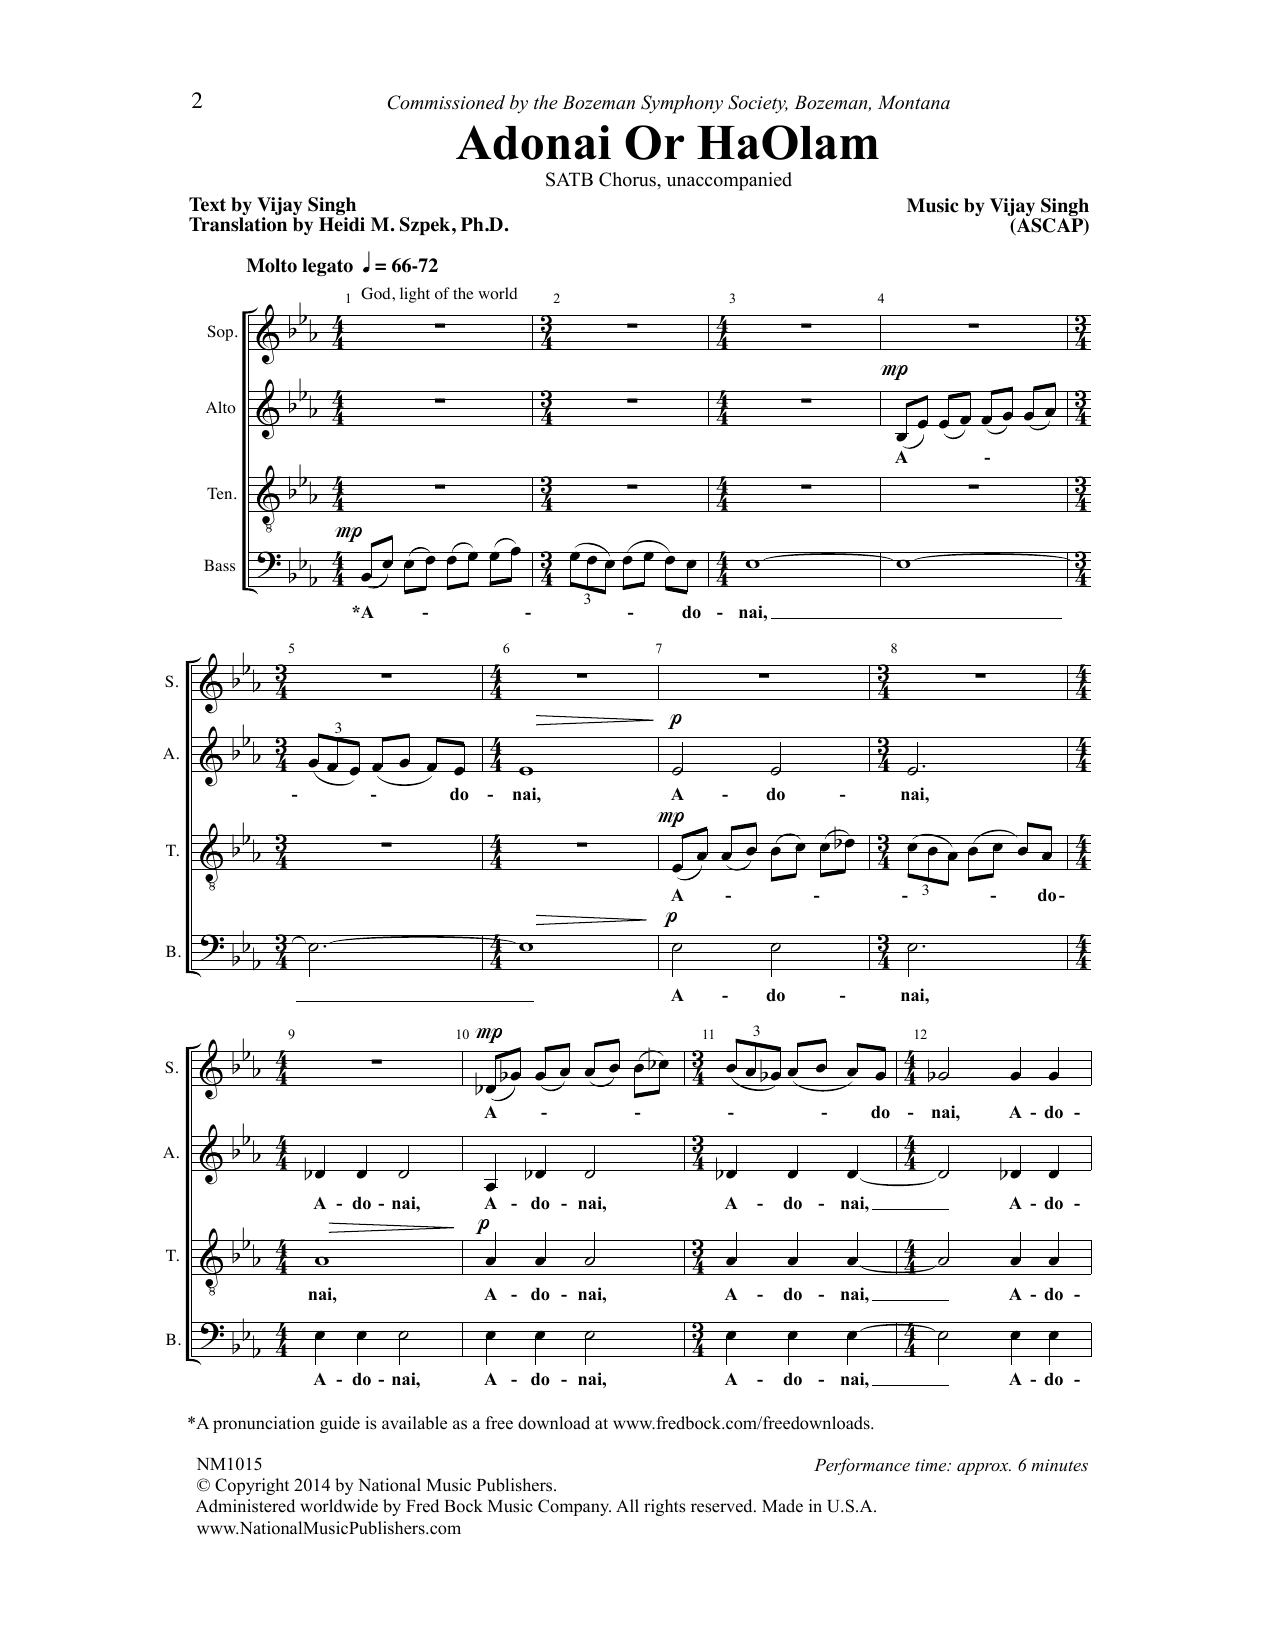 Vijay Singh Adoni Or HaOlam Sheet Music Notes & Chords for Choral - Download or Print PDF